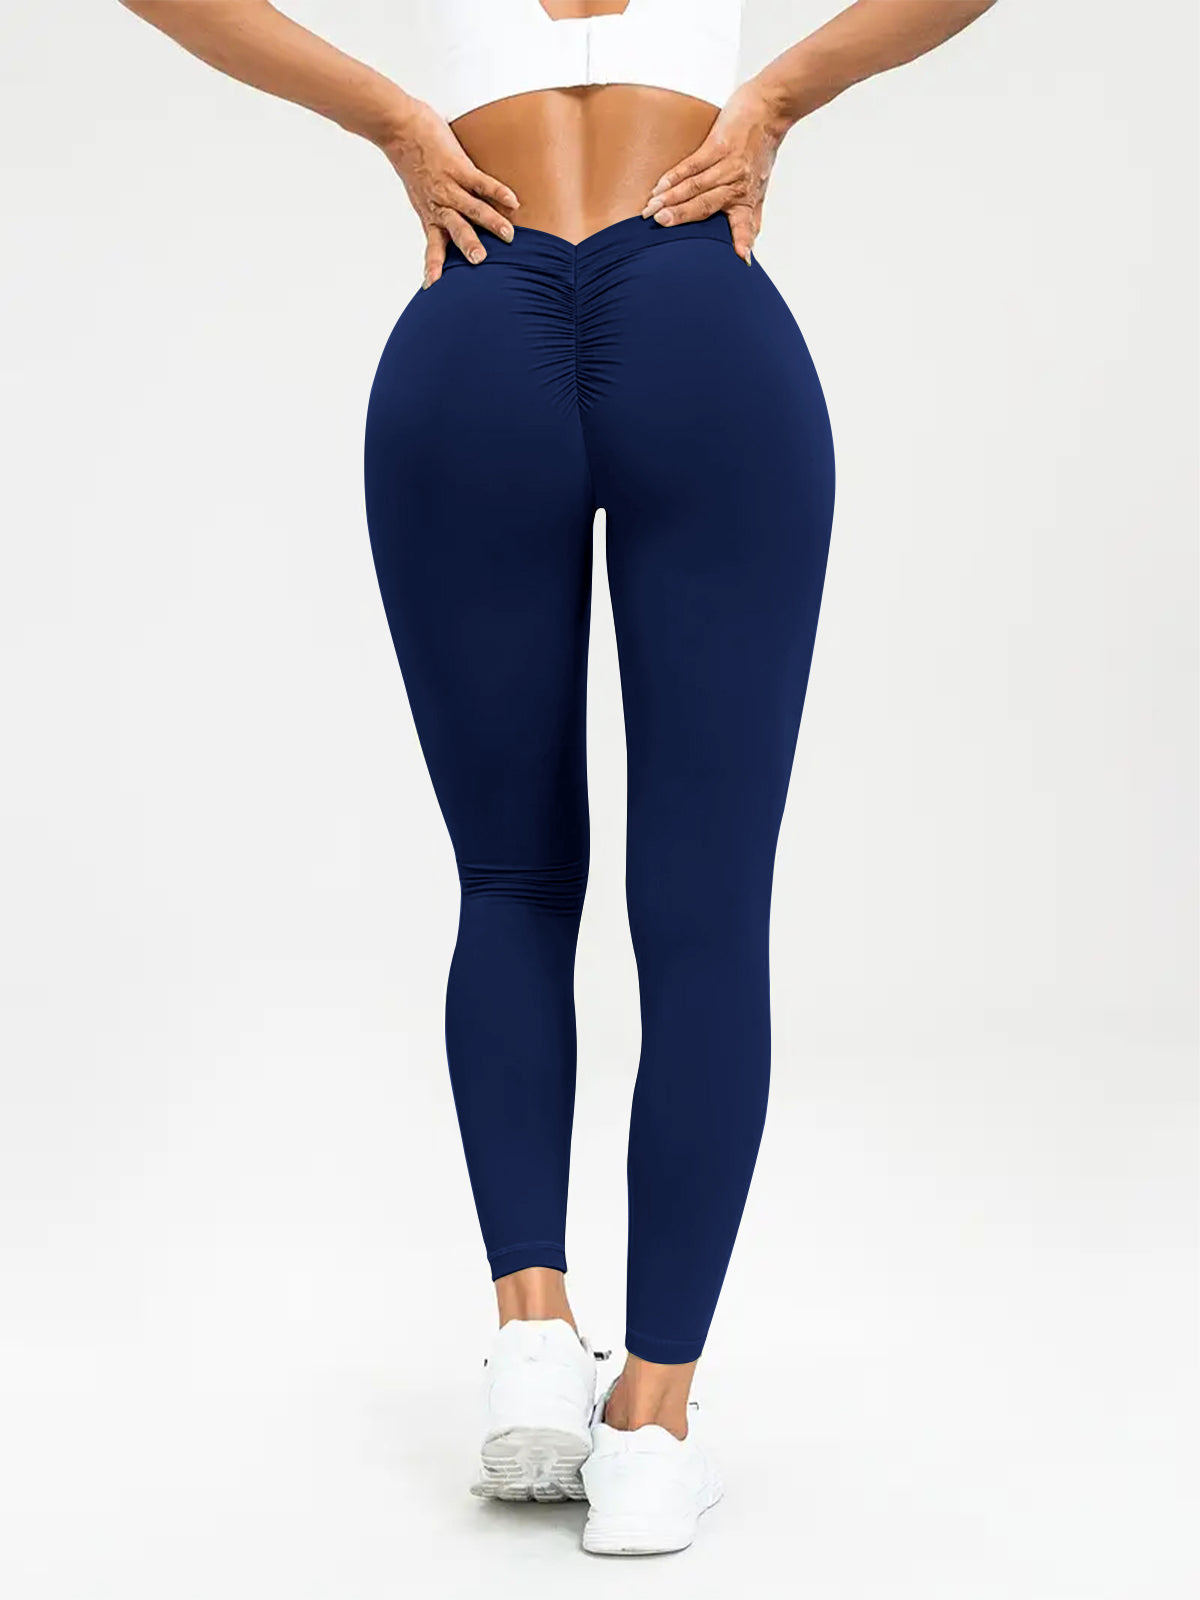 Women's Yoga Pants High Waist Lift High Elastic Tight Fitness Trousers - Better Life